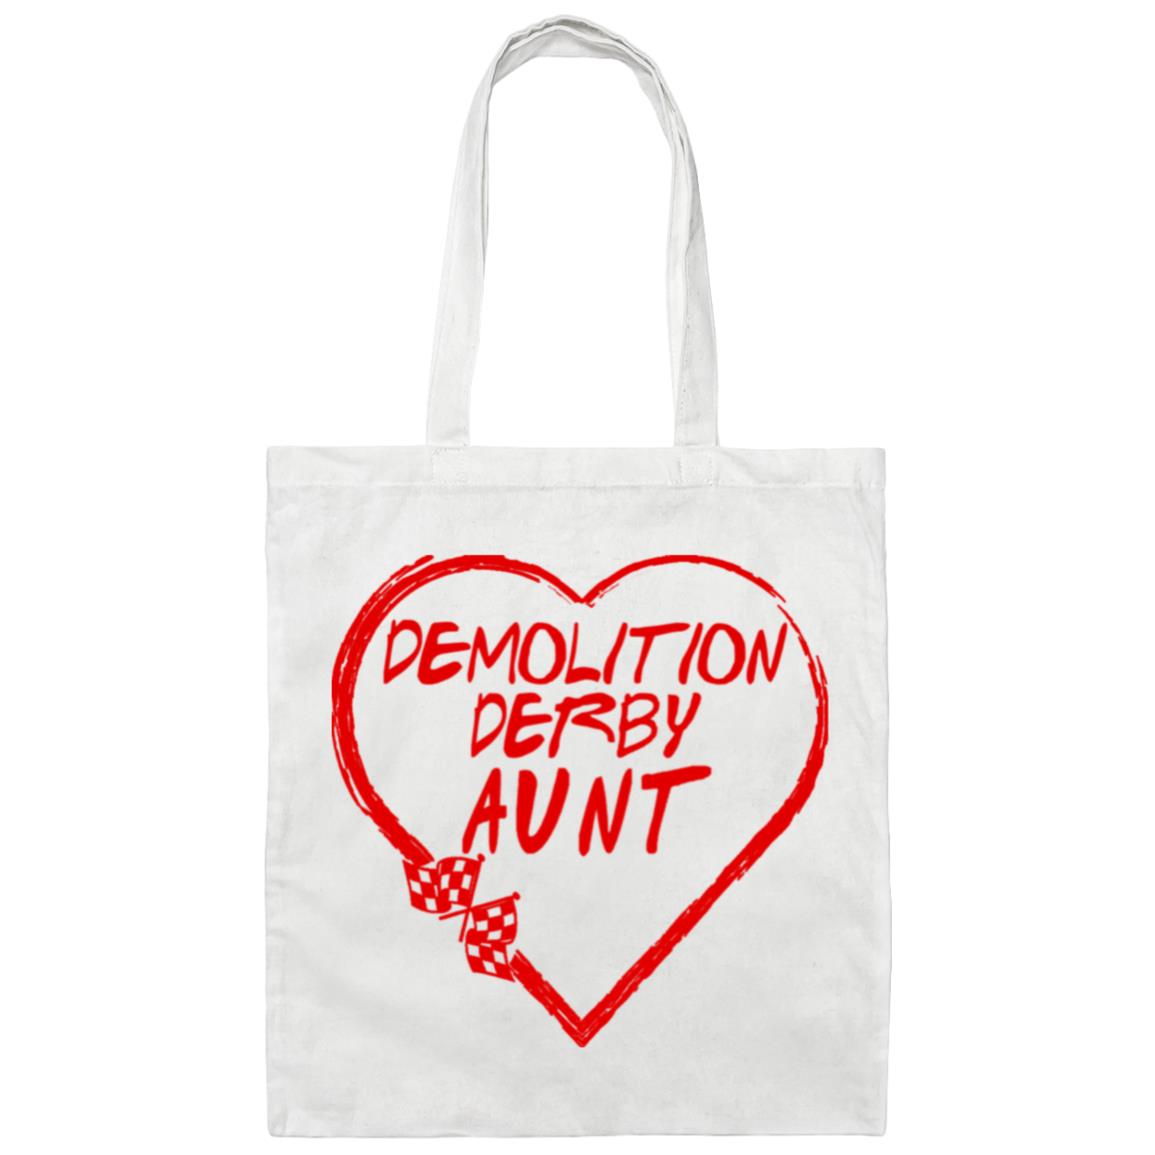 Demolition Derby Aunt Heart Canvas Tote Bag